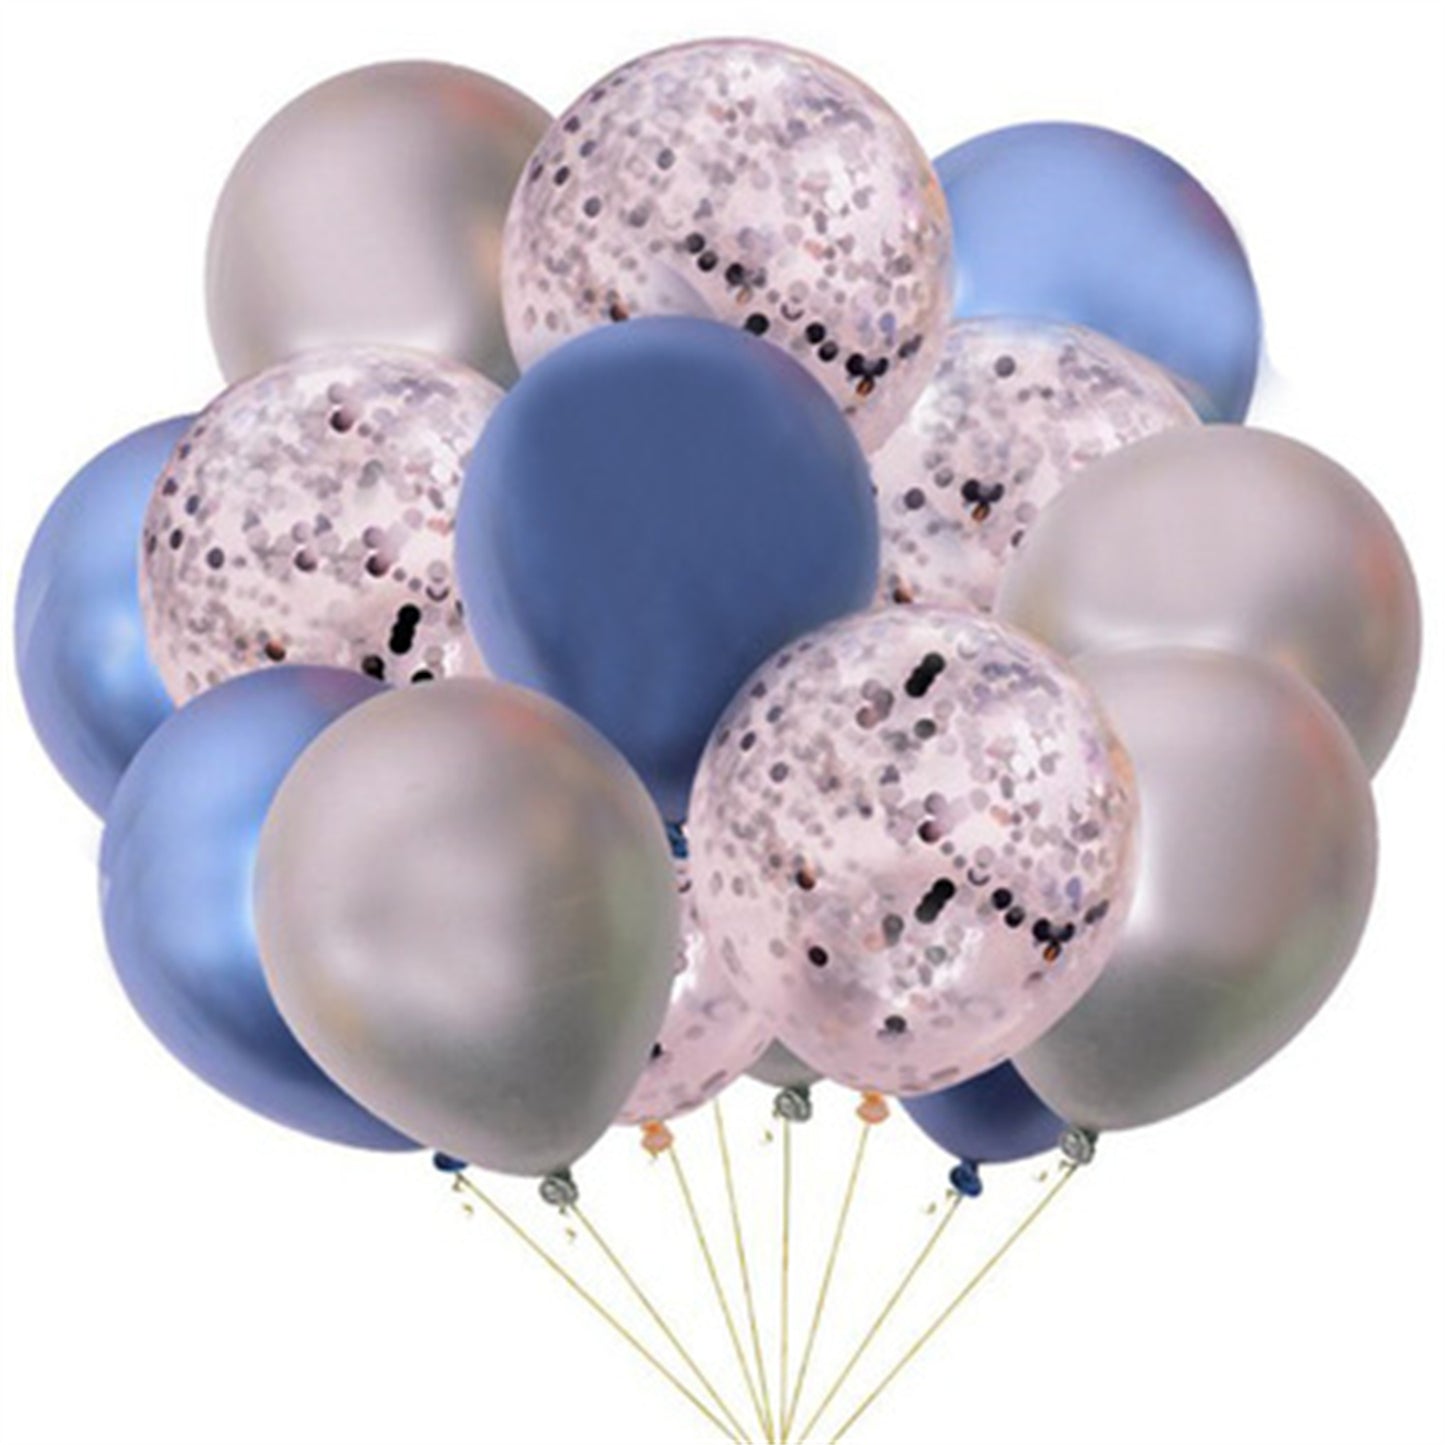 Metal confetti sequined latex balloon